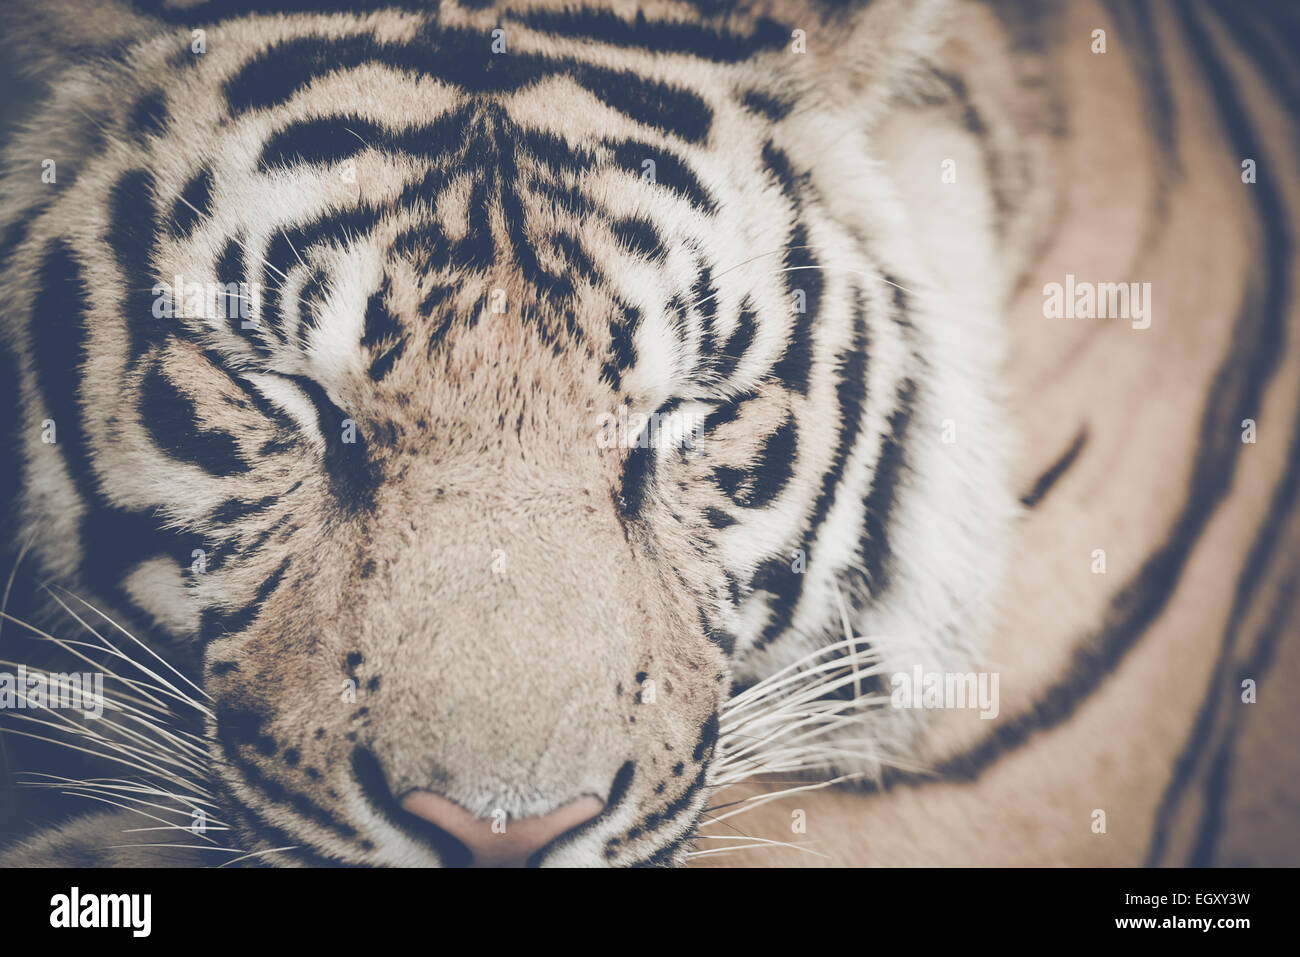 Tiger hautnah mit Instagram Retrostil Filter Stockfotografie - Alamy